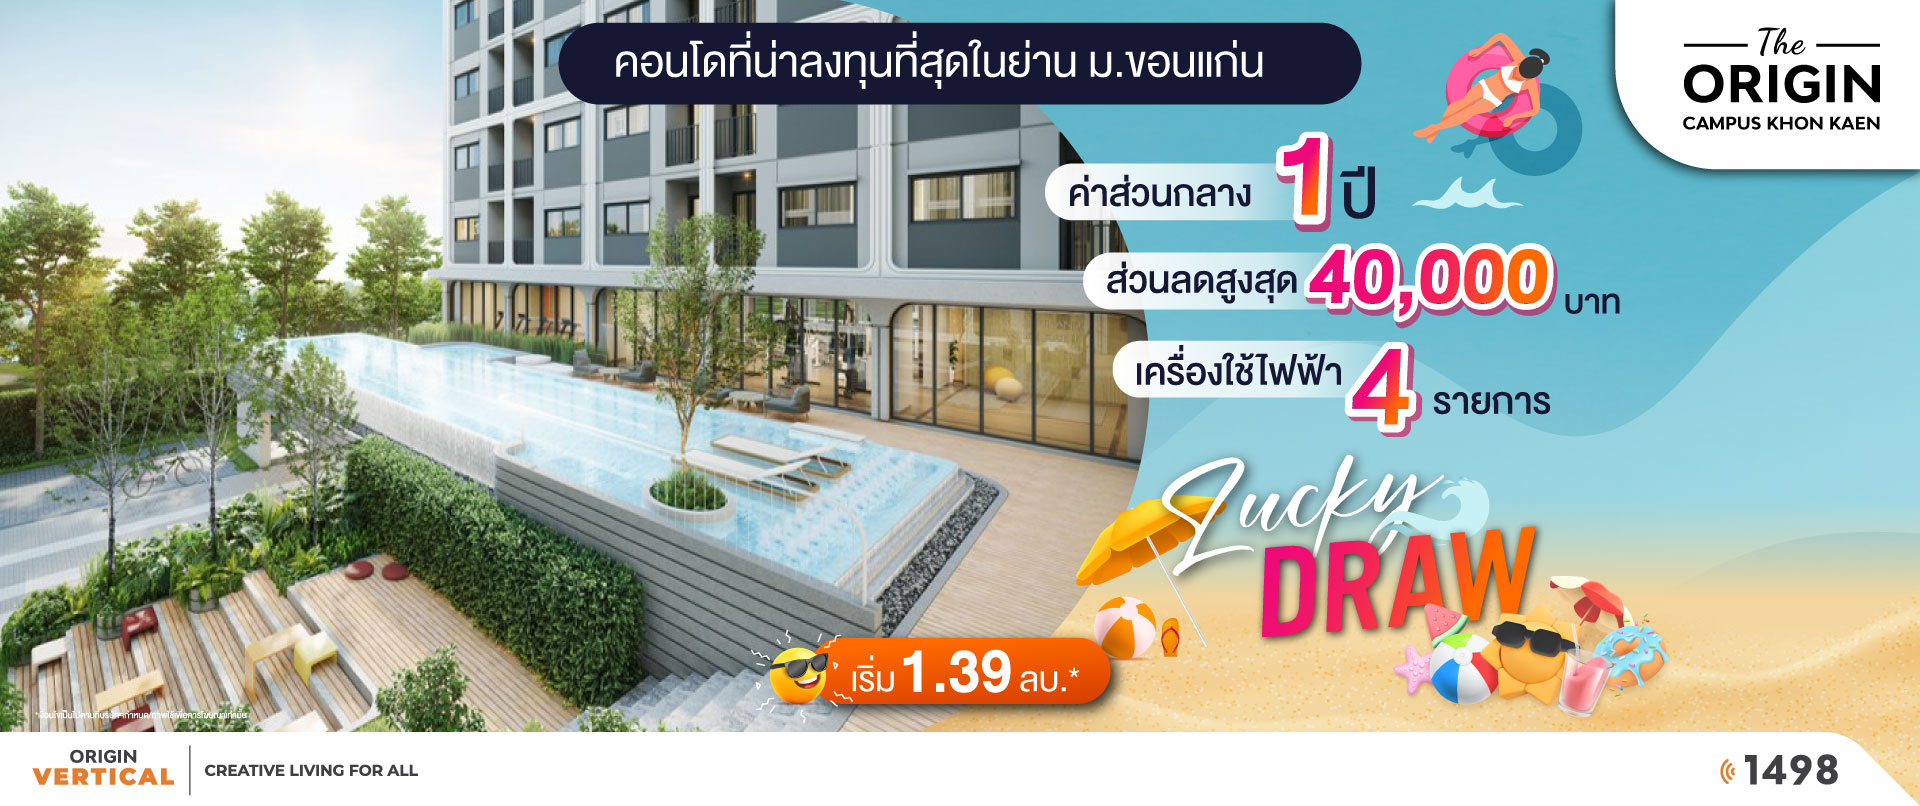 The Origin Campus Khon kaen ads